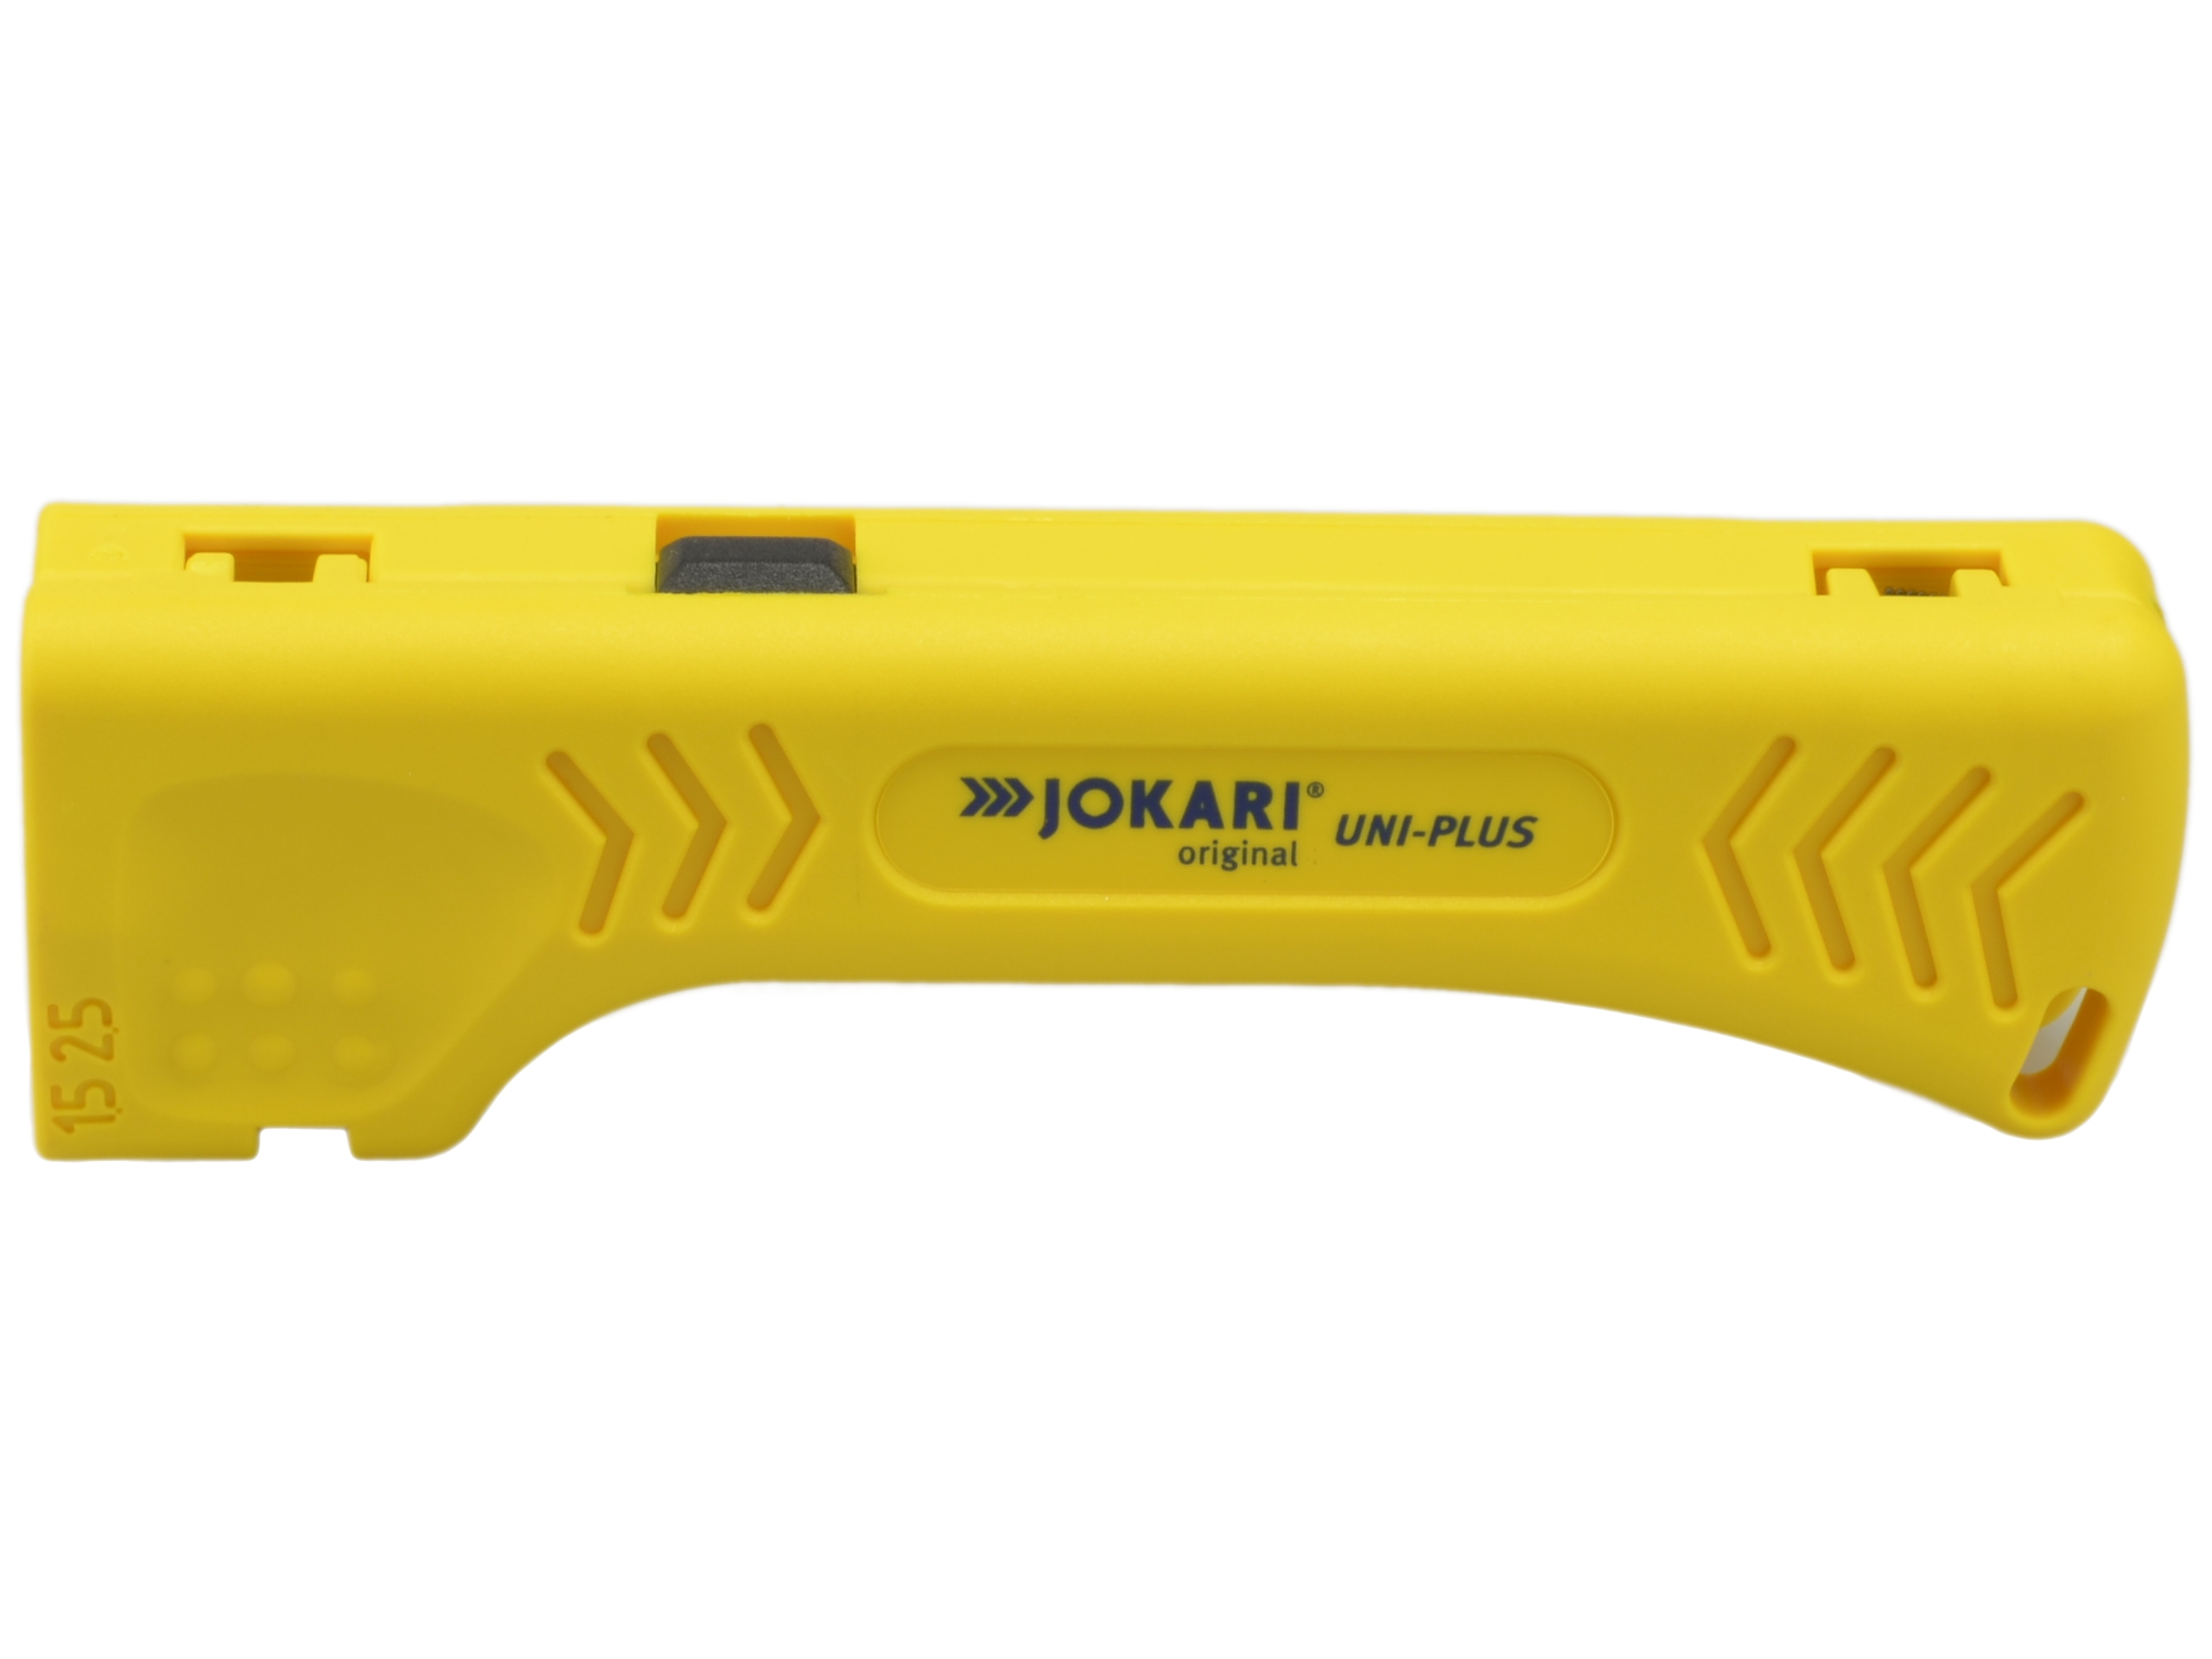 Jokari super 4. Jokari 30900 съемник изоляции Allrounder 30900. Jokari 30400 - инструмент для снятия изоляции Uni-Plus для круглого кабеля. Jokari Allrounder съемник изоляции. Ручной инструмент Jokari инструмент для снятия изоляции Jokari Allrounder.